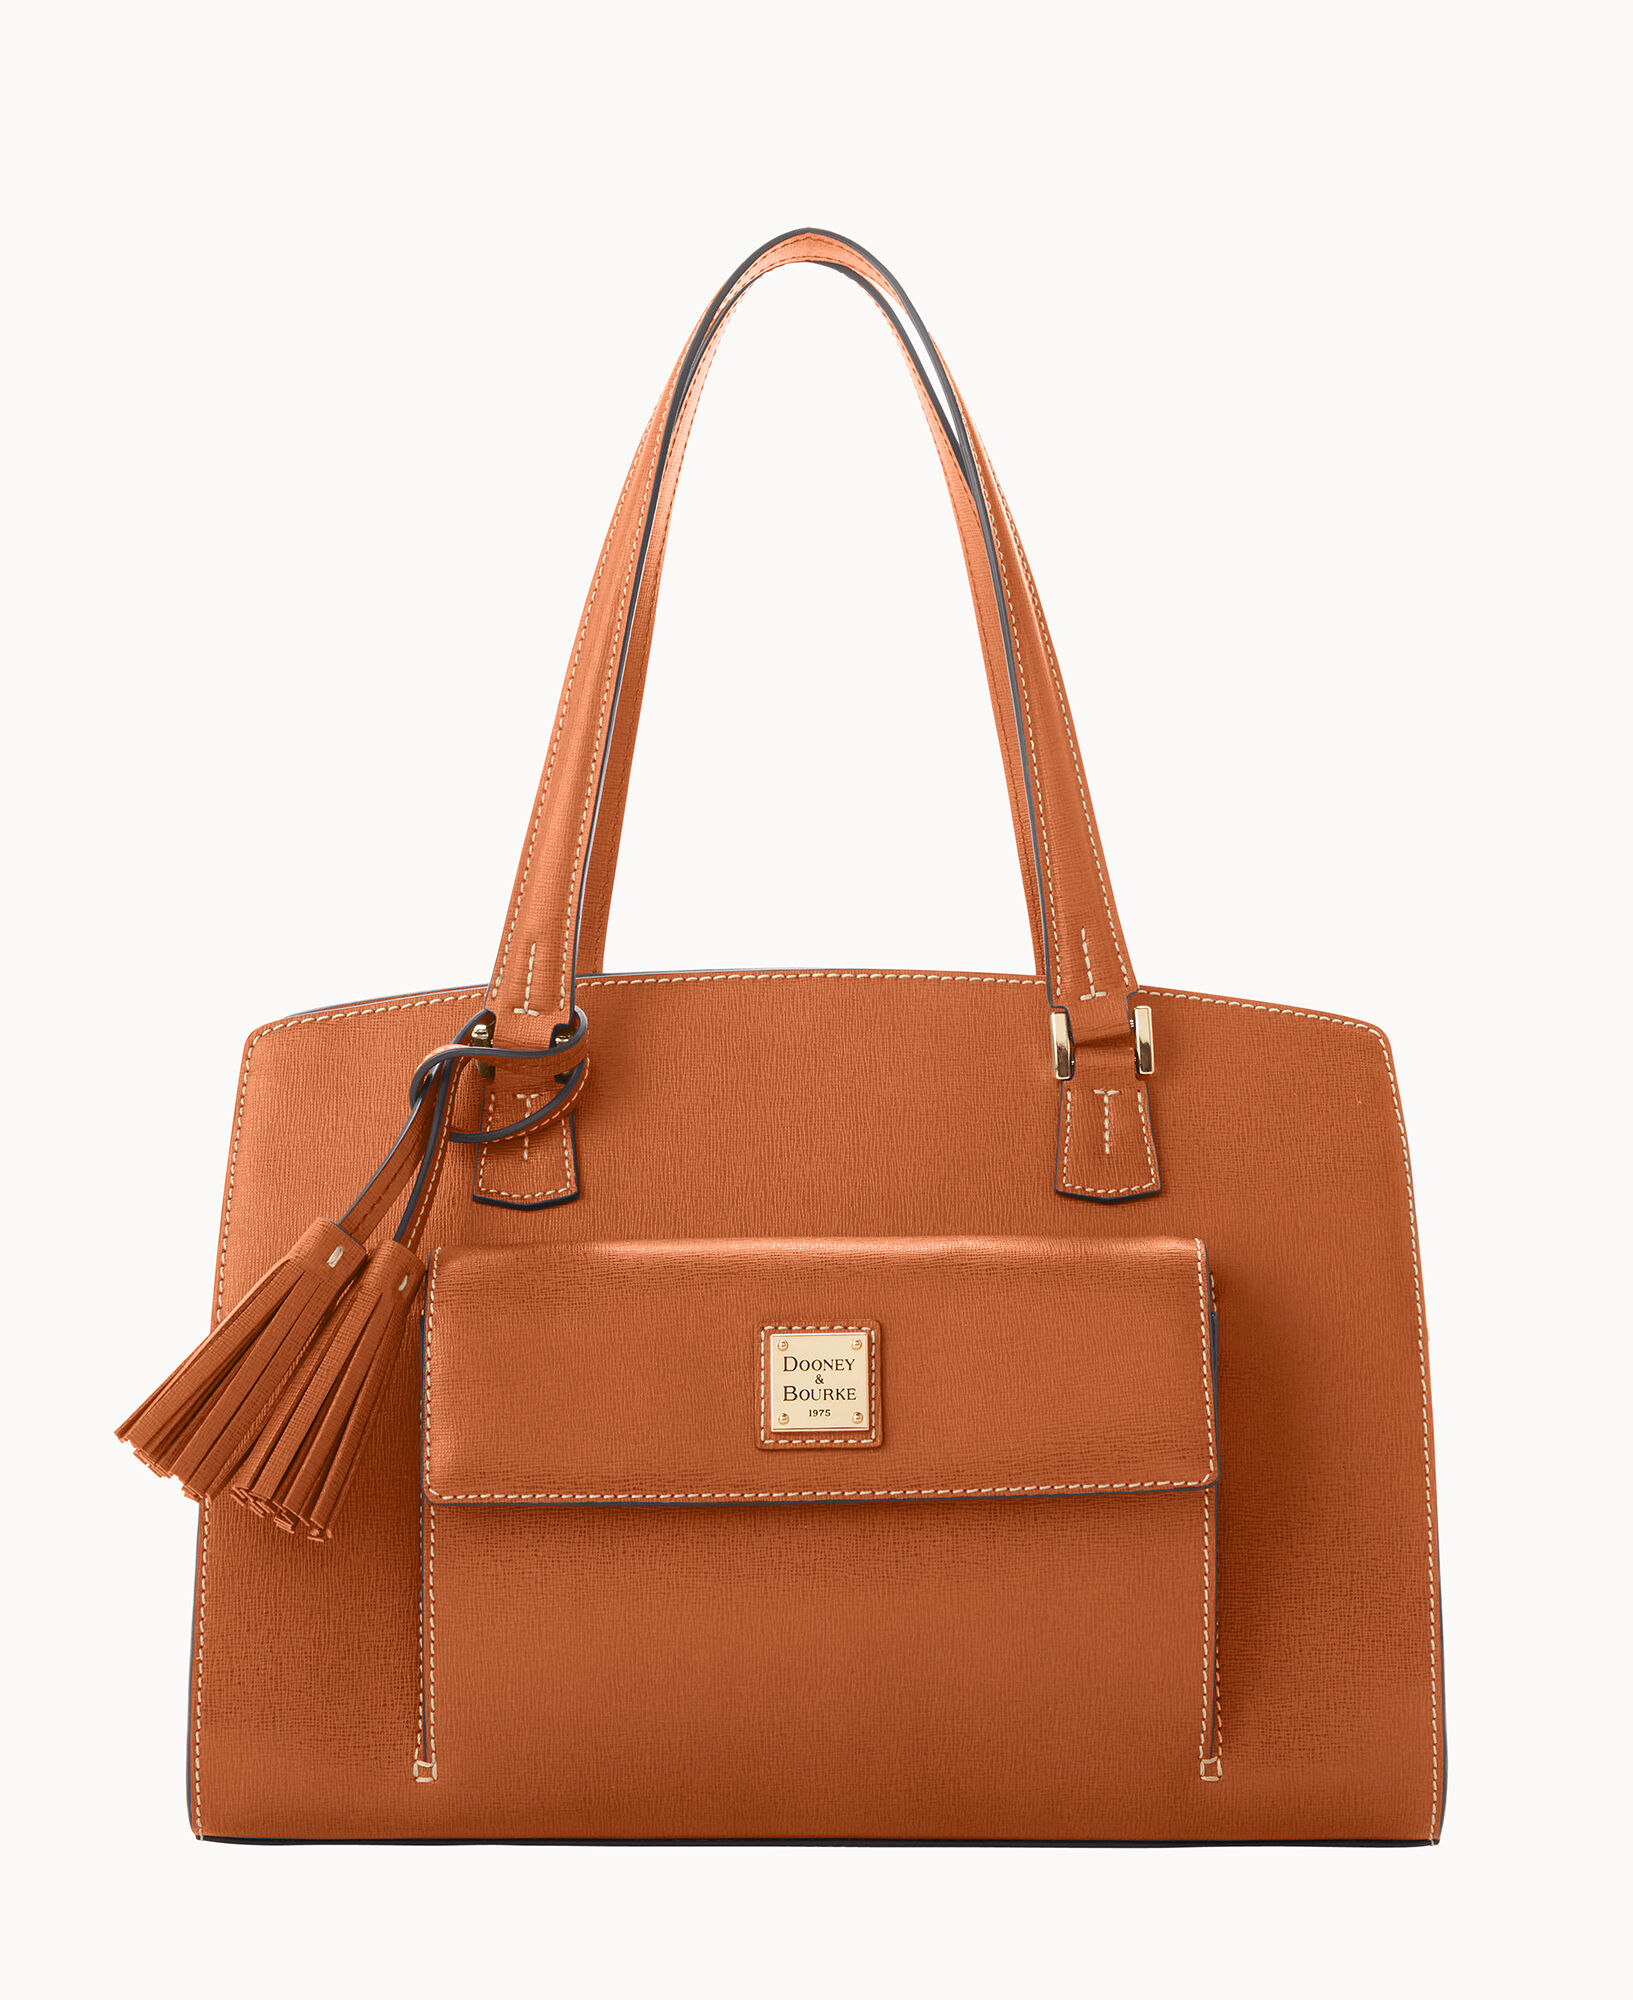 Dooney & Bourke Saffiano Leather Baguette Bag